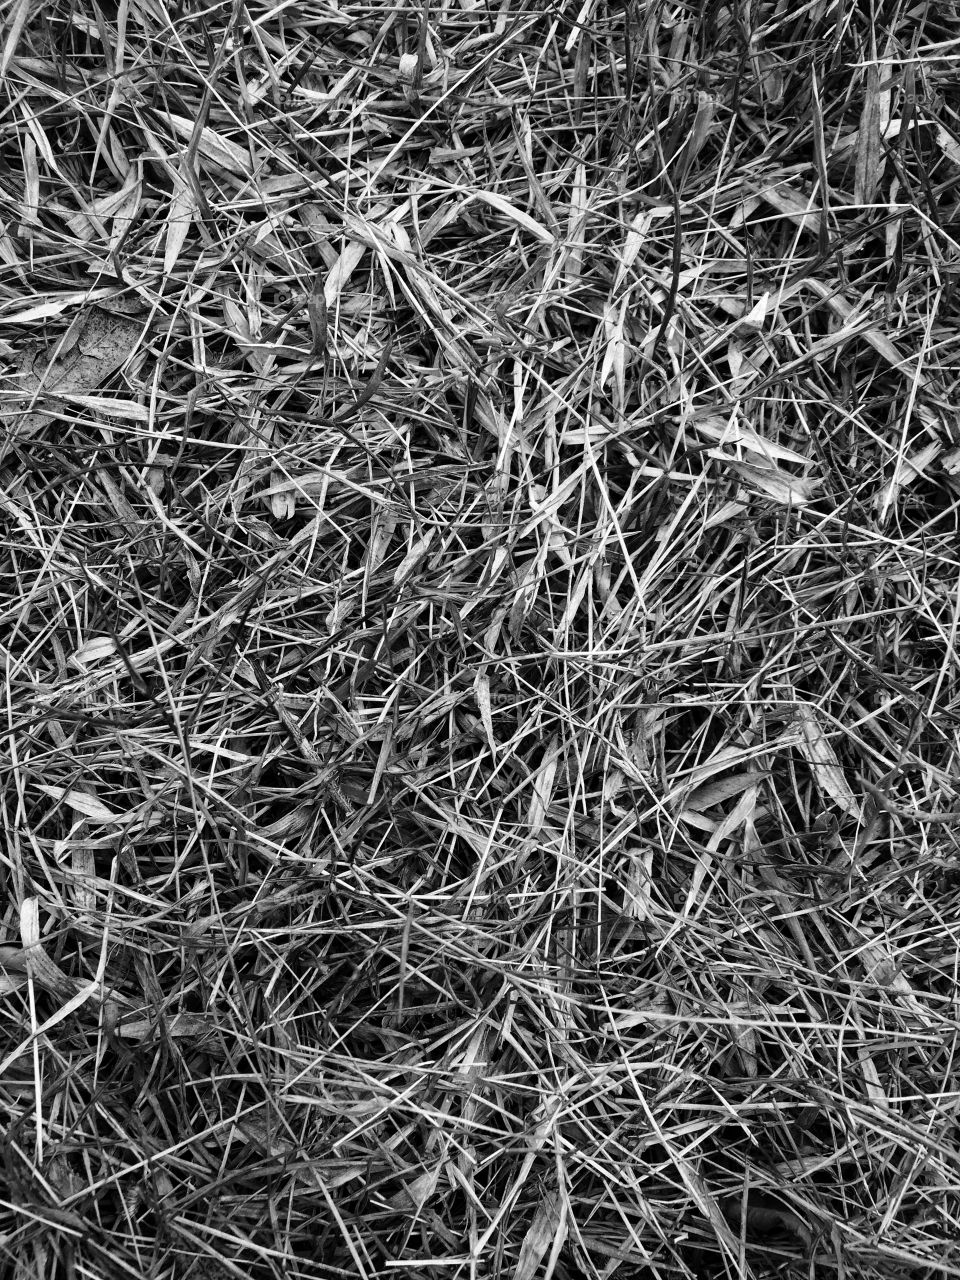 Texture grasses
